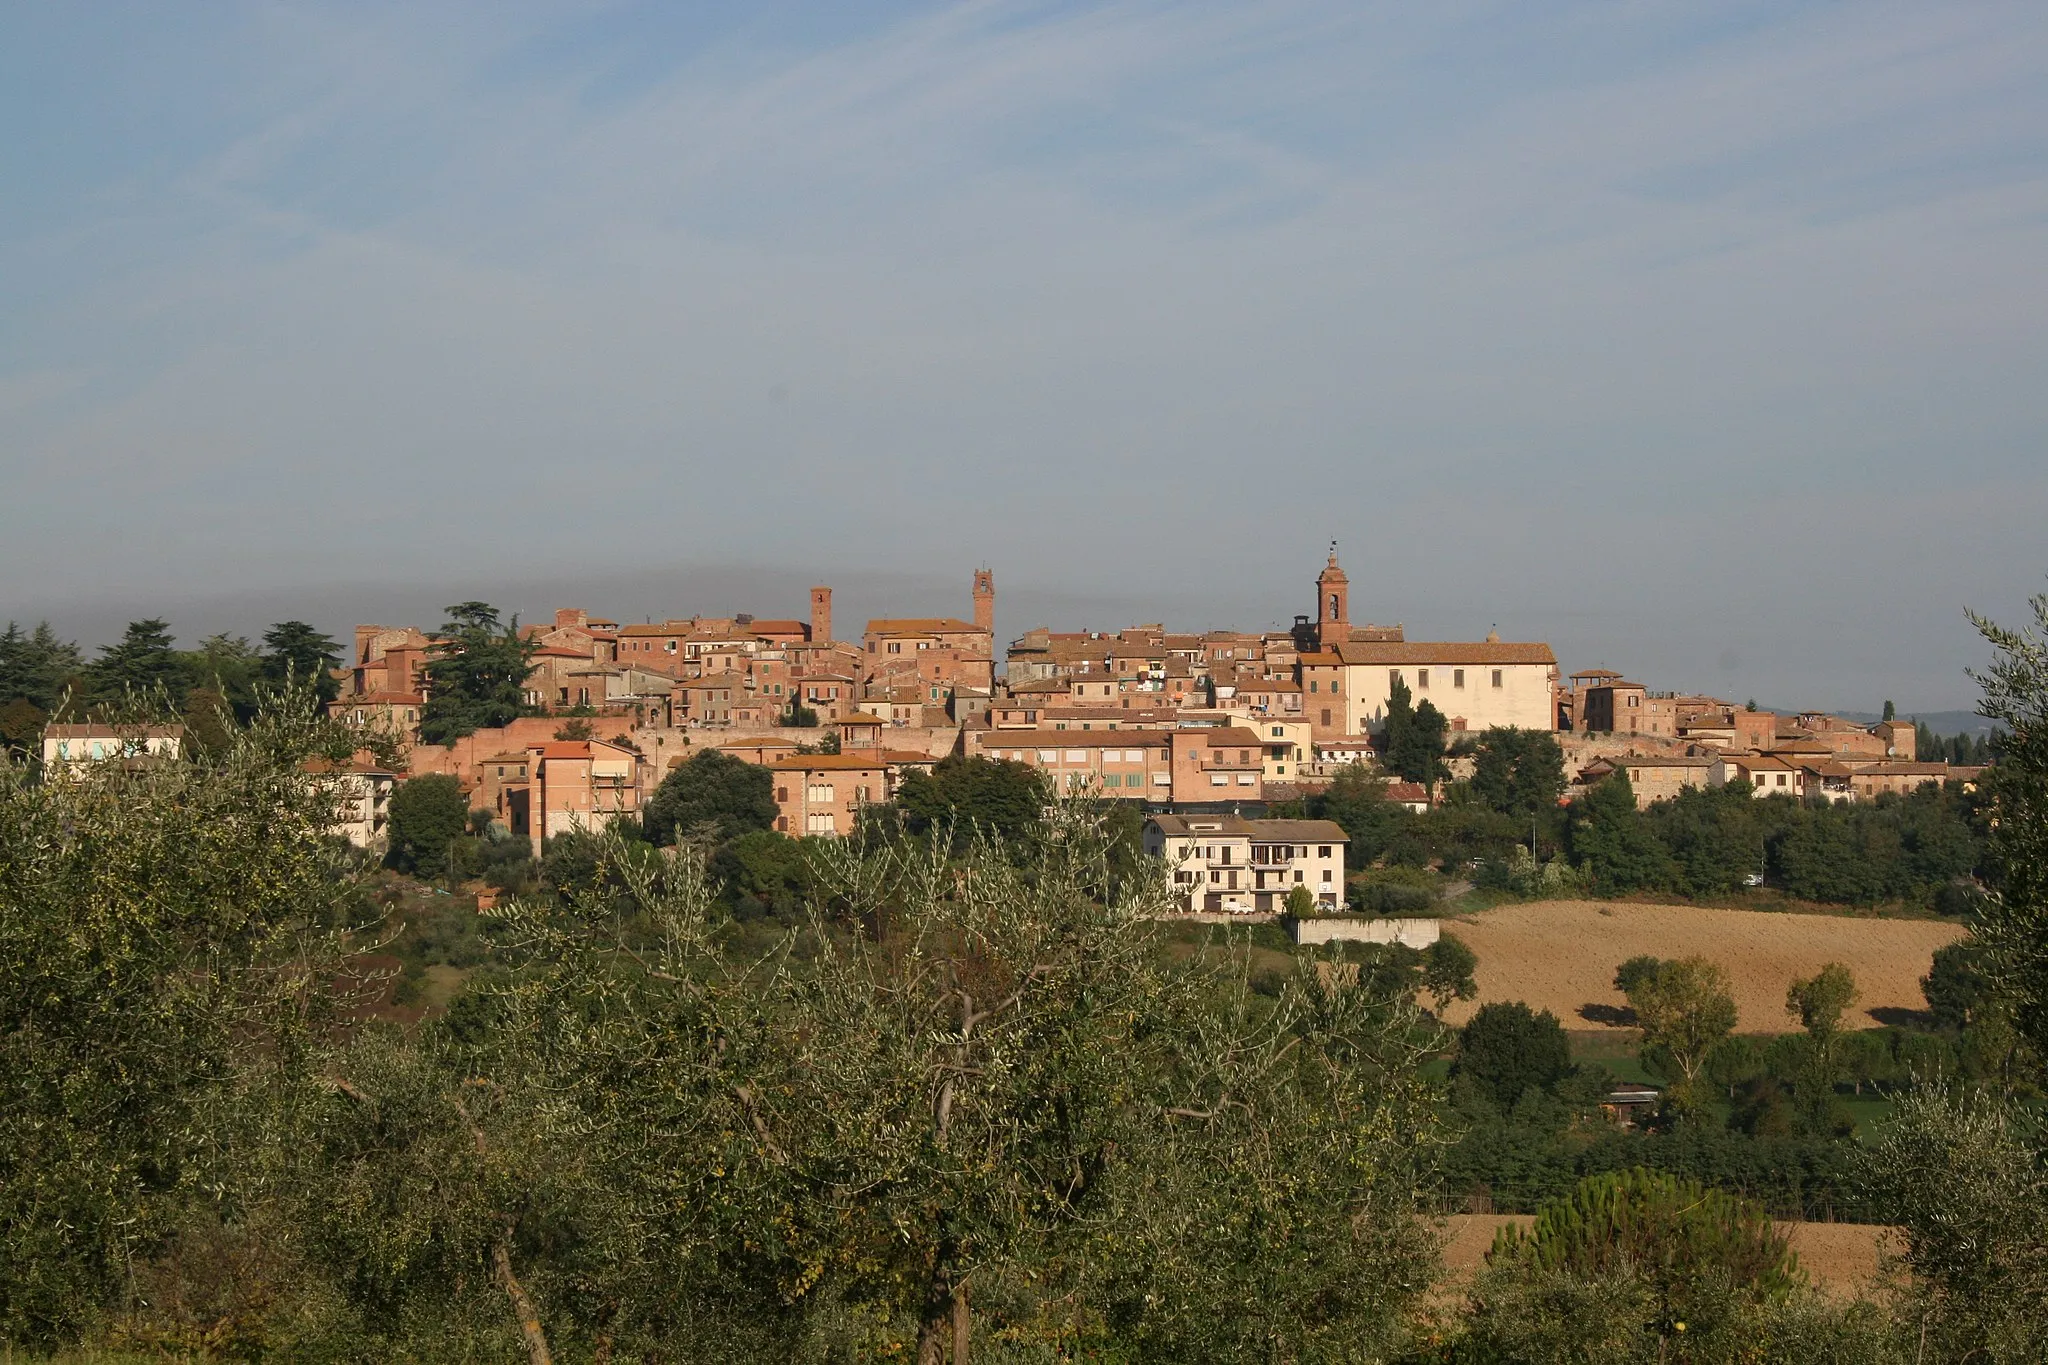 Photo showing: The old town of Torrita di Siena